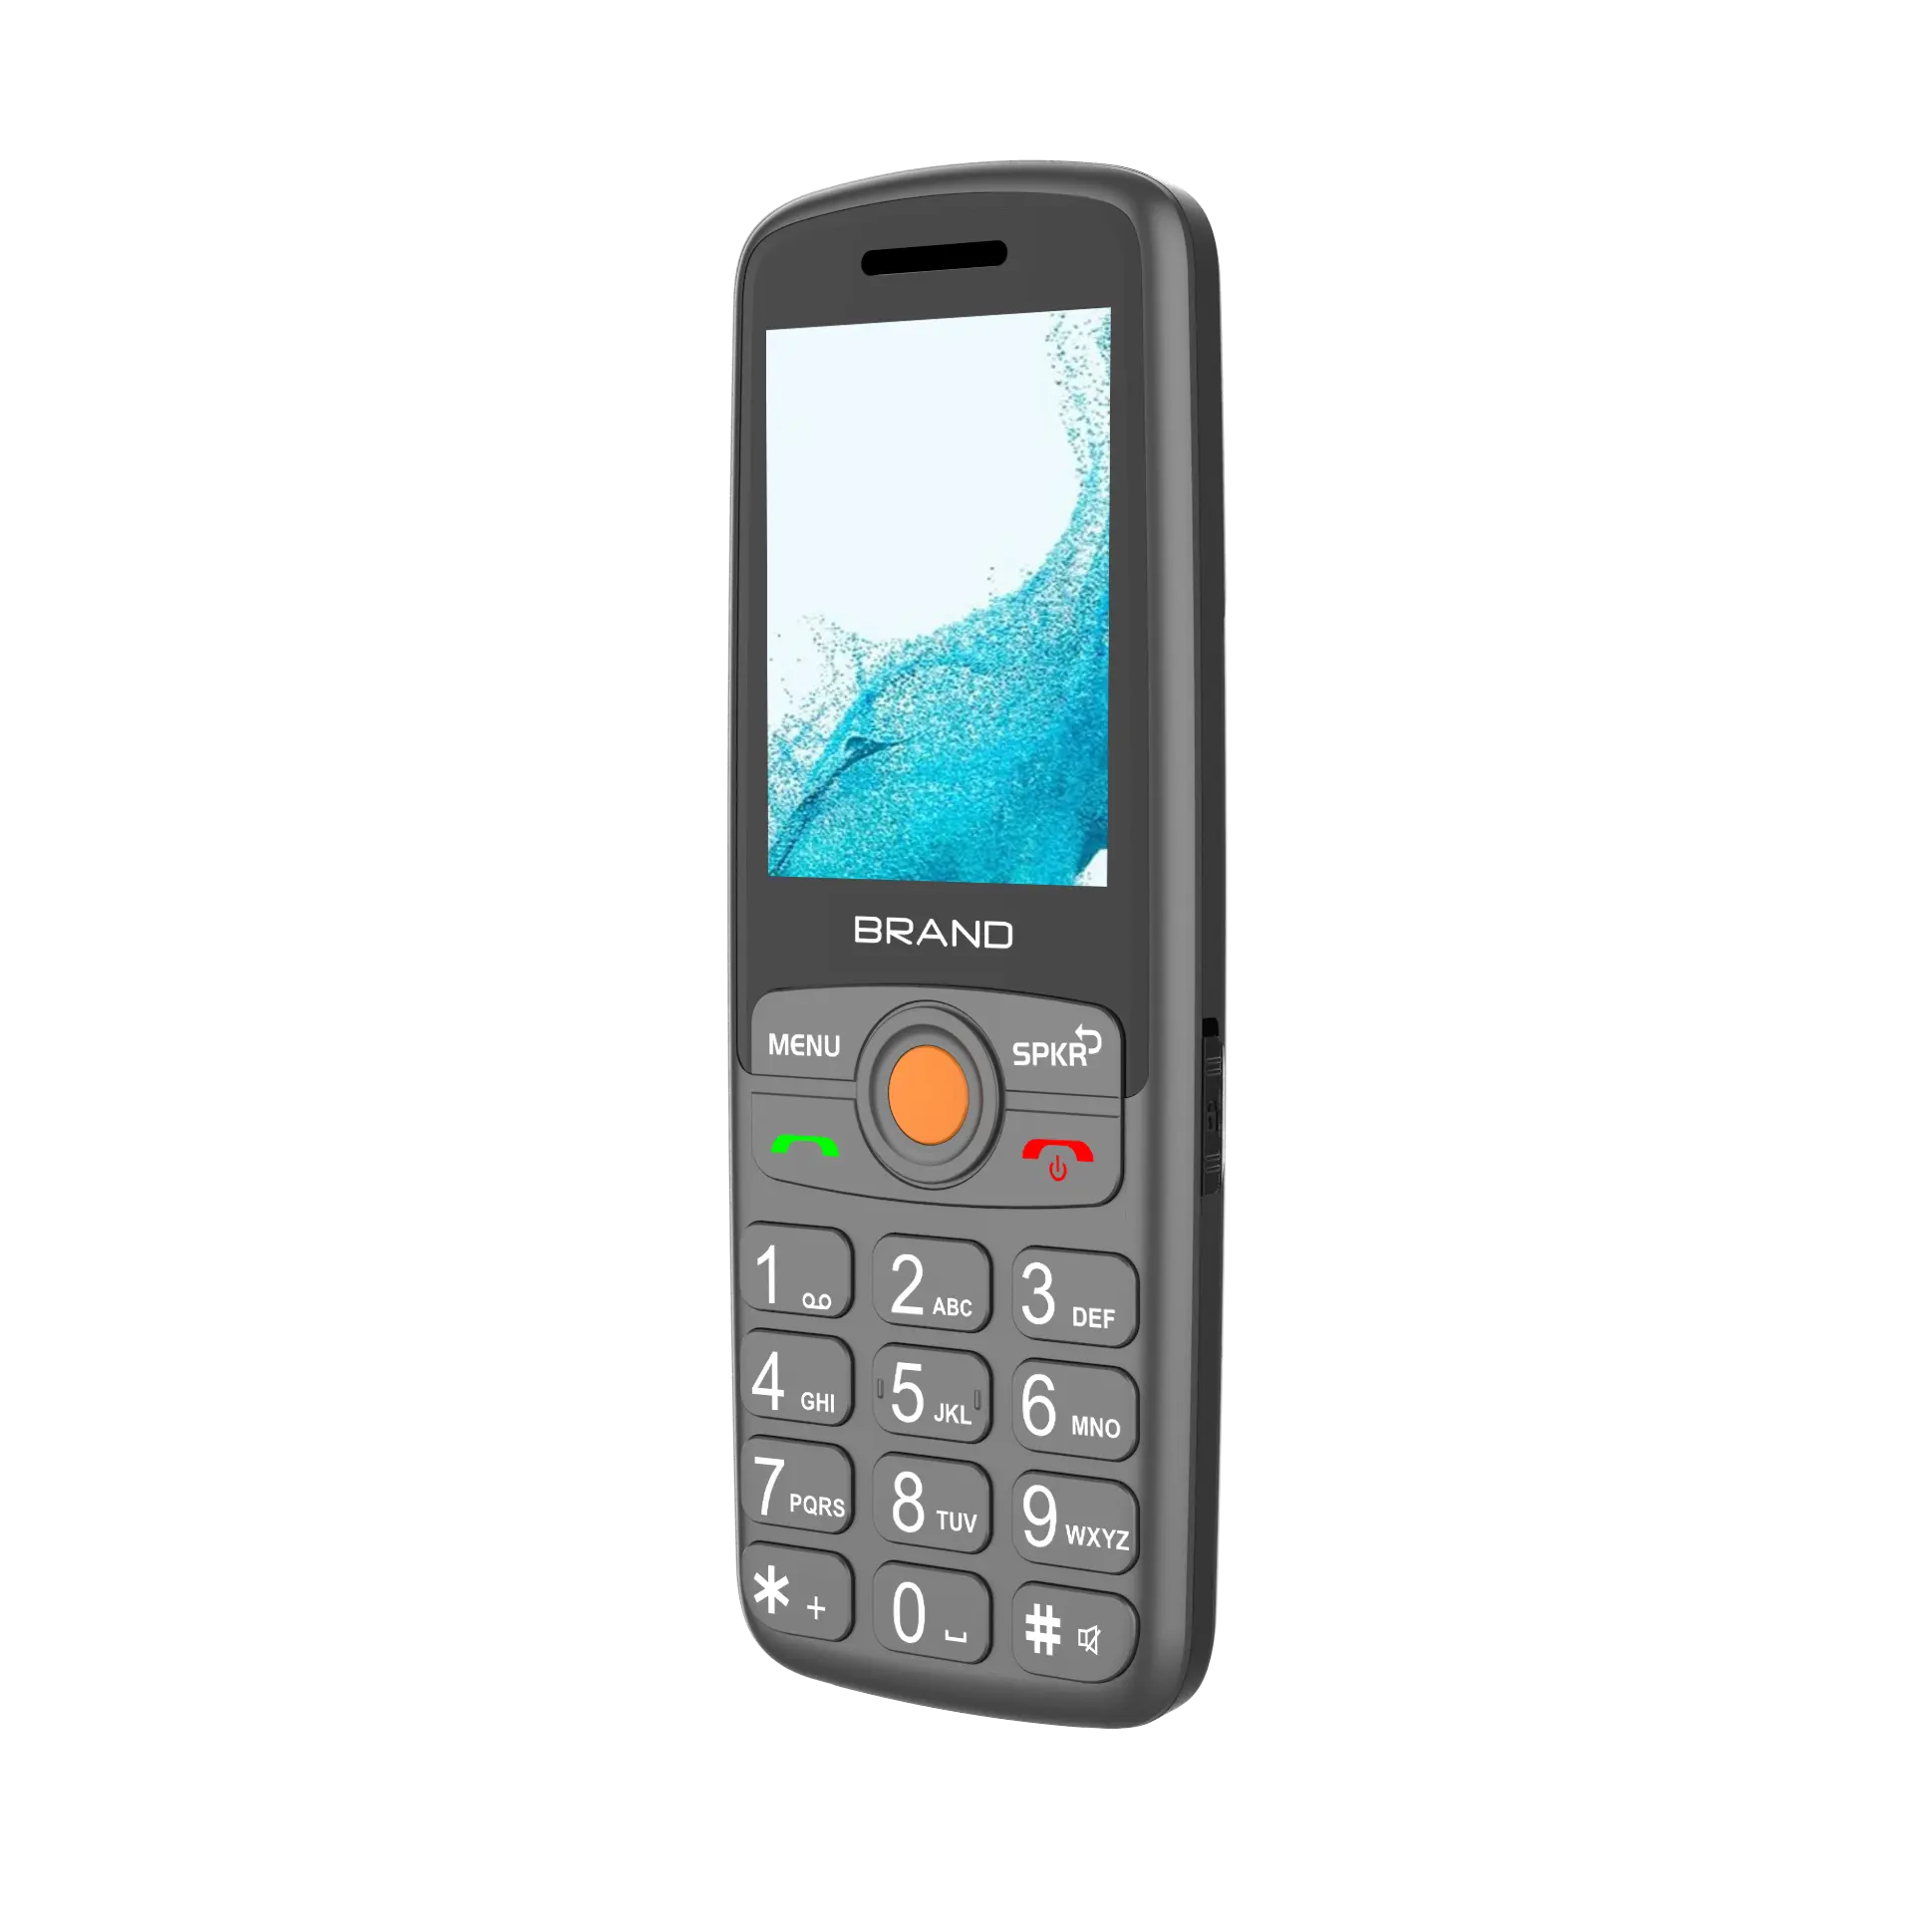 Ying taiスリムモデルF122.4インチベーシックスリムキーパッド携帯電話4Gフィーチャーフォン4G電話